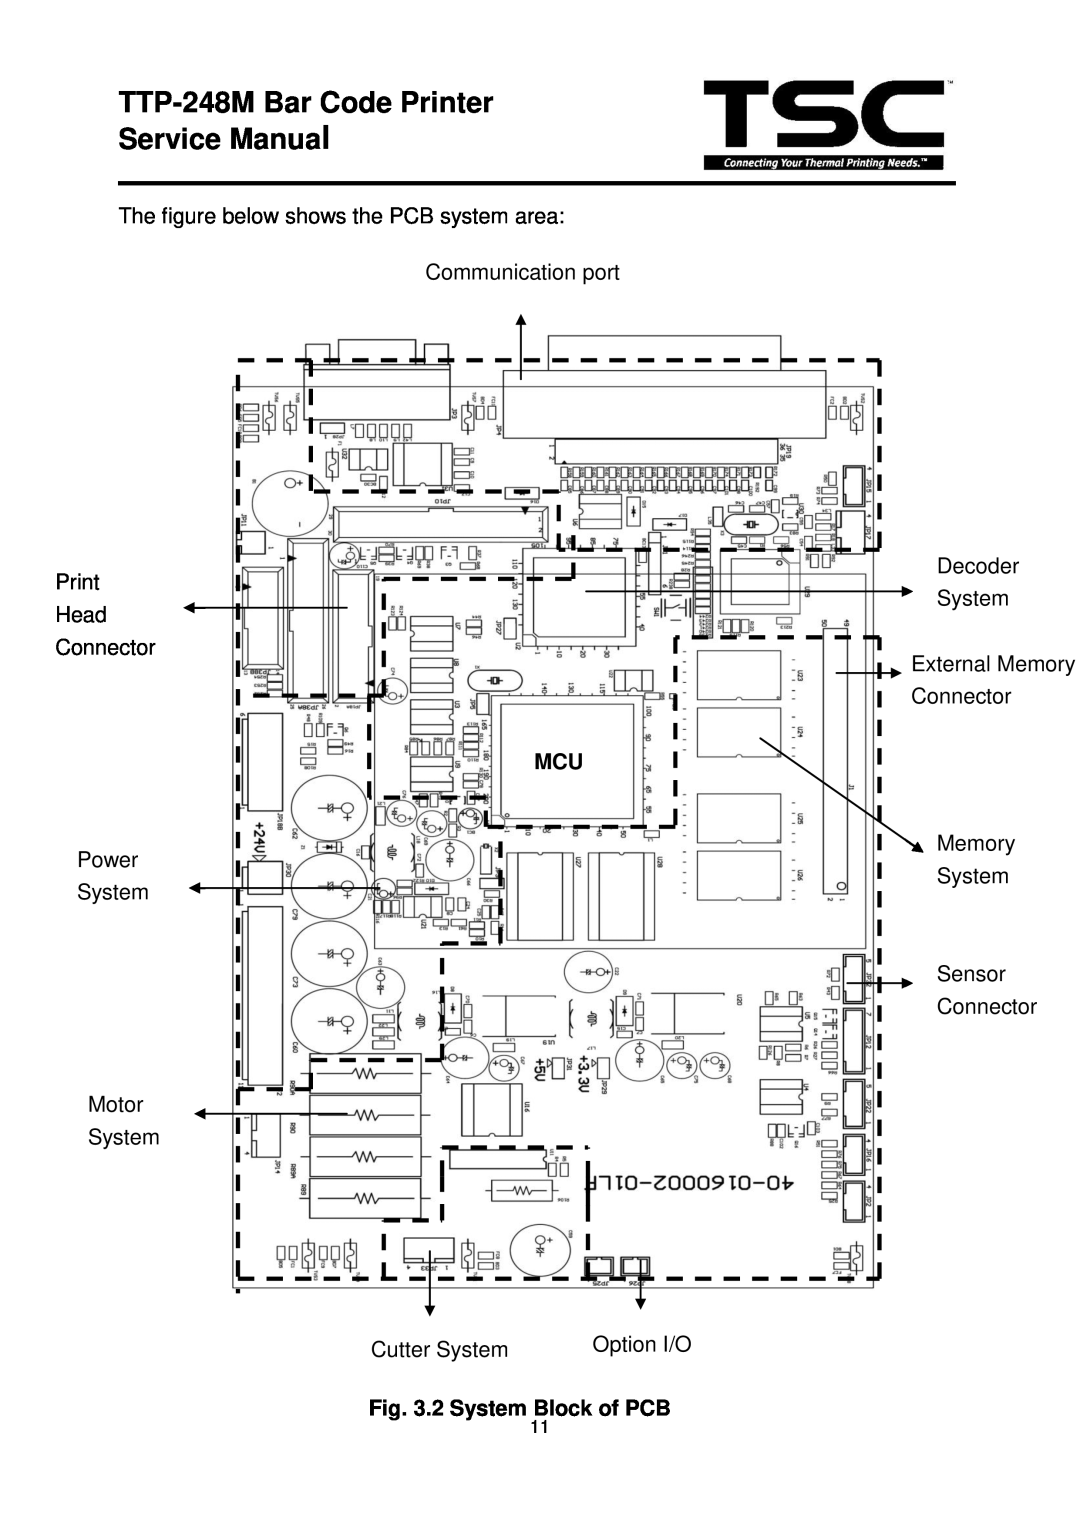 The Speaker Company TTP 248M service manual 2 System Block of PCB, TTP-248M Bar Code Printer Service Manual 